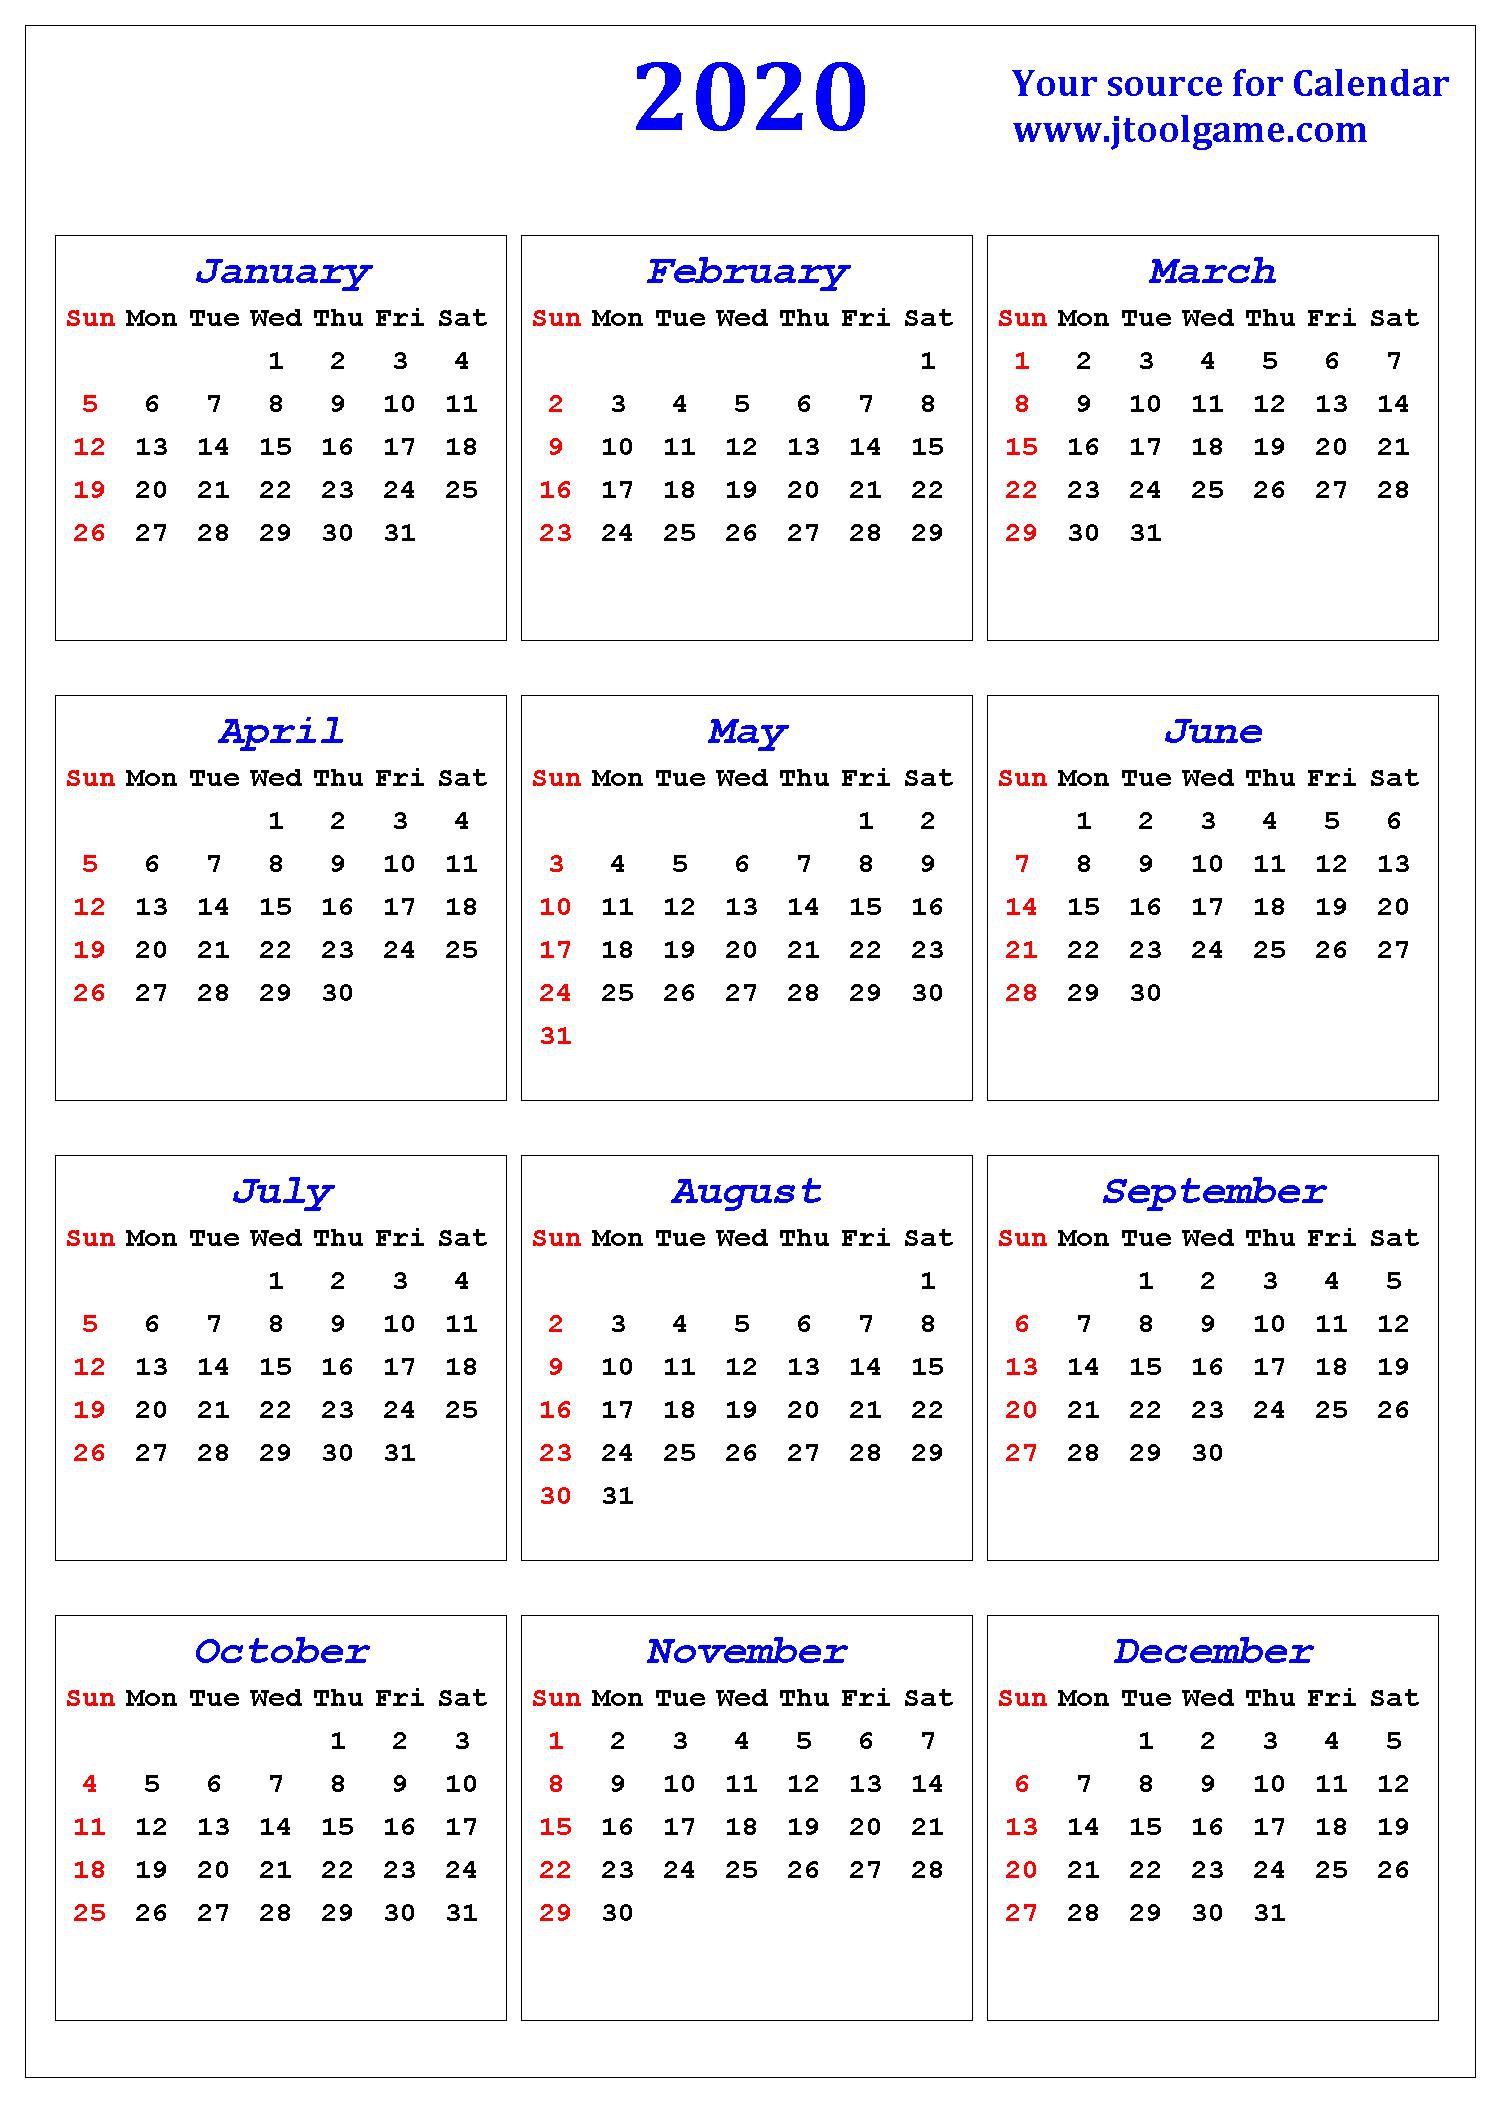 2020 calendar printable calendar 2020 calendar in